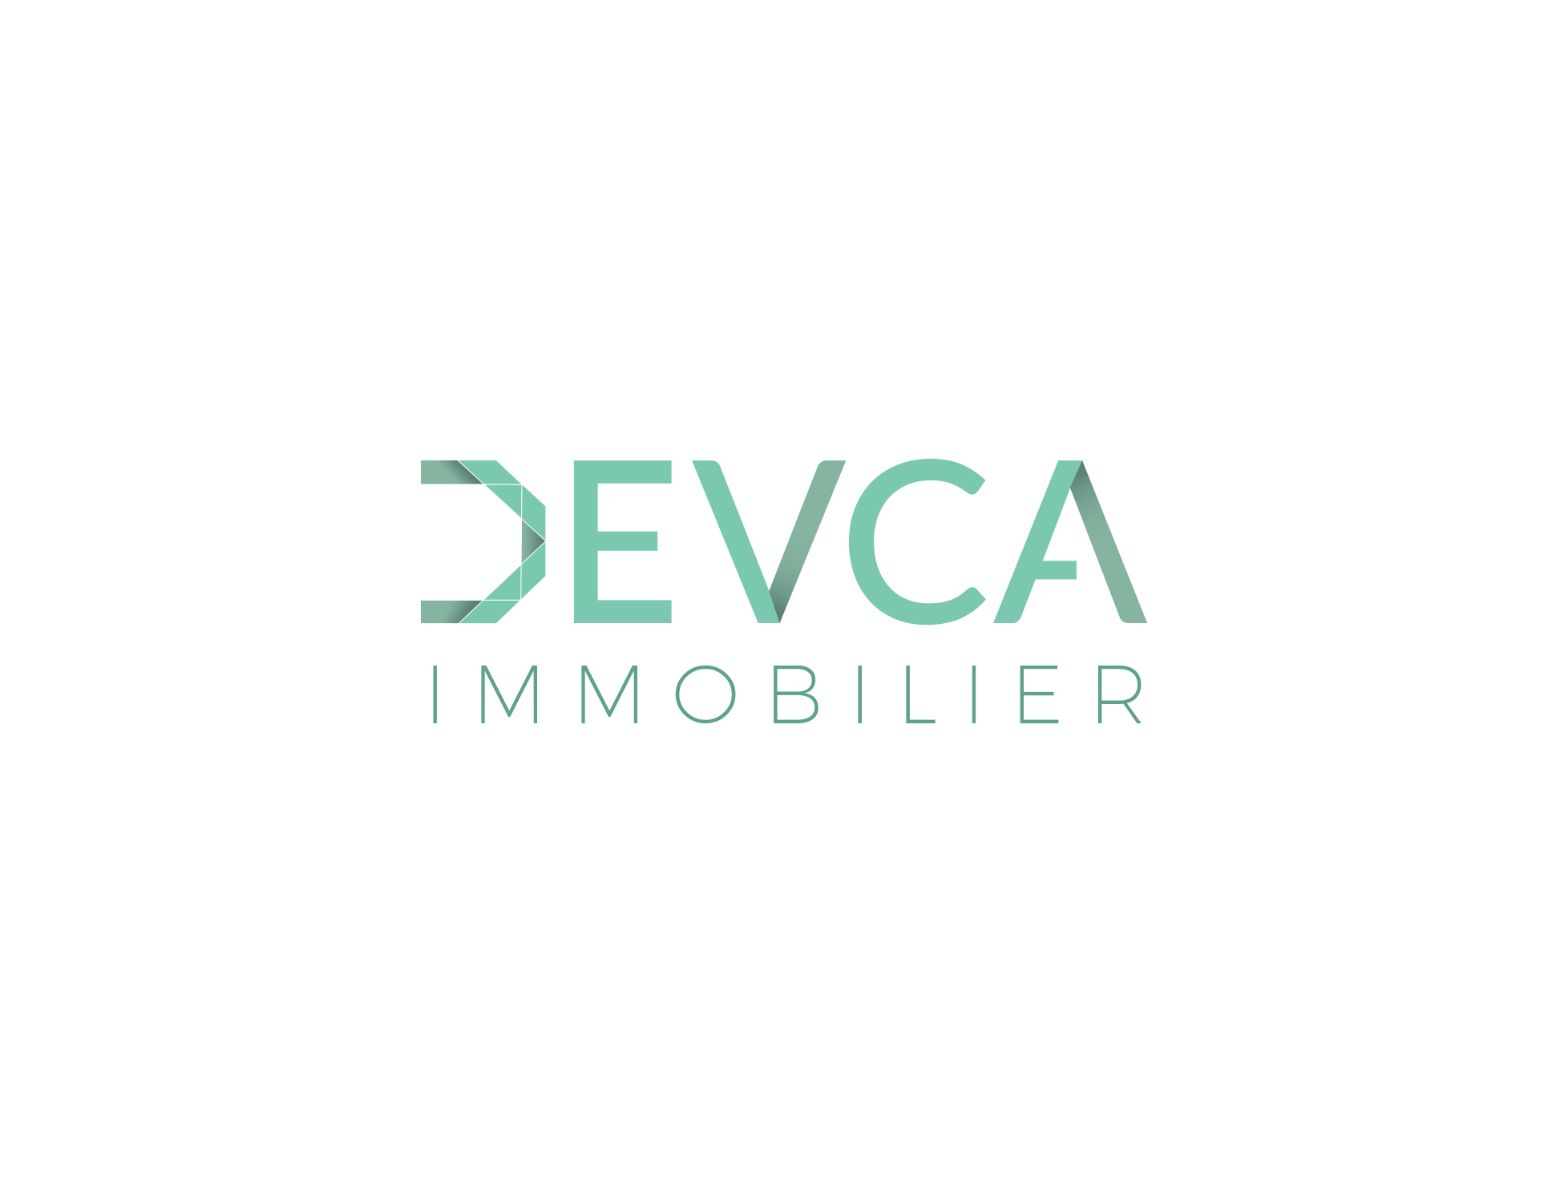 idylliq - DEVCA - conception de logo